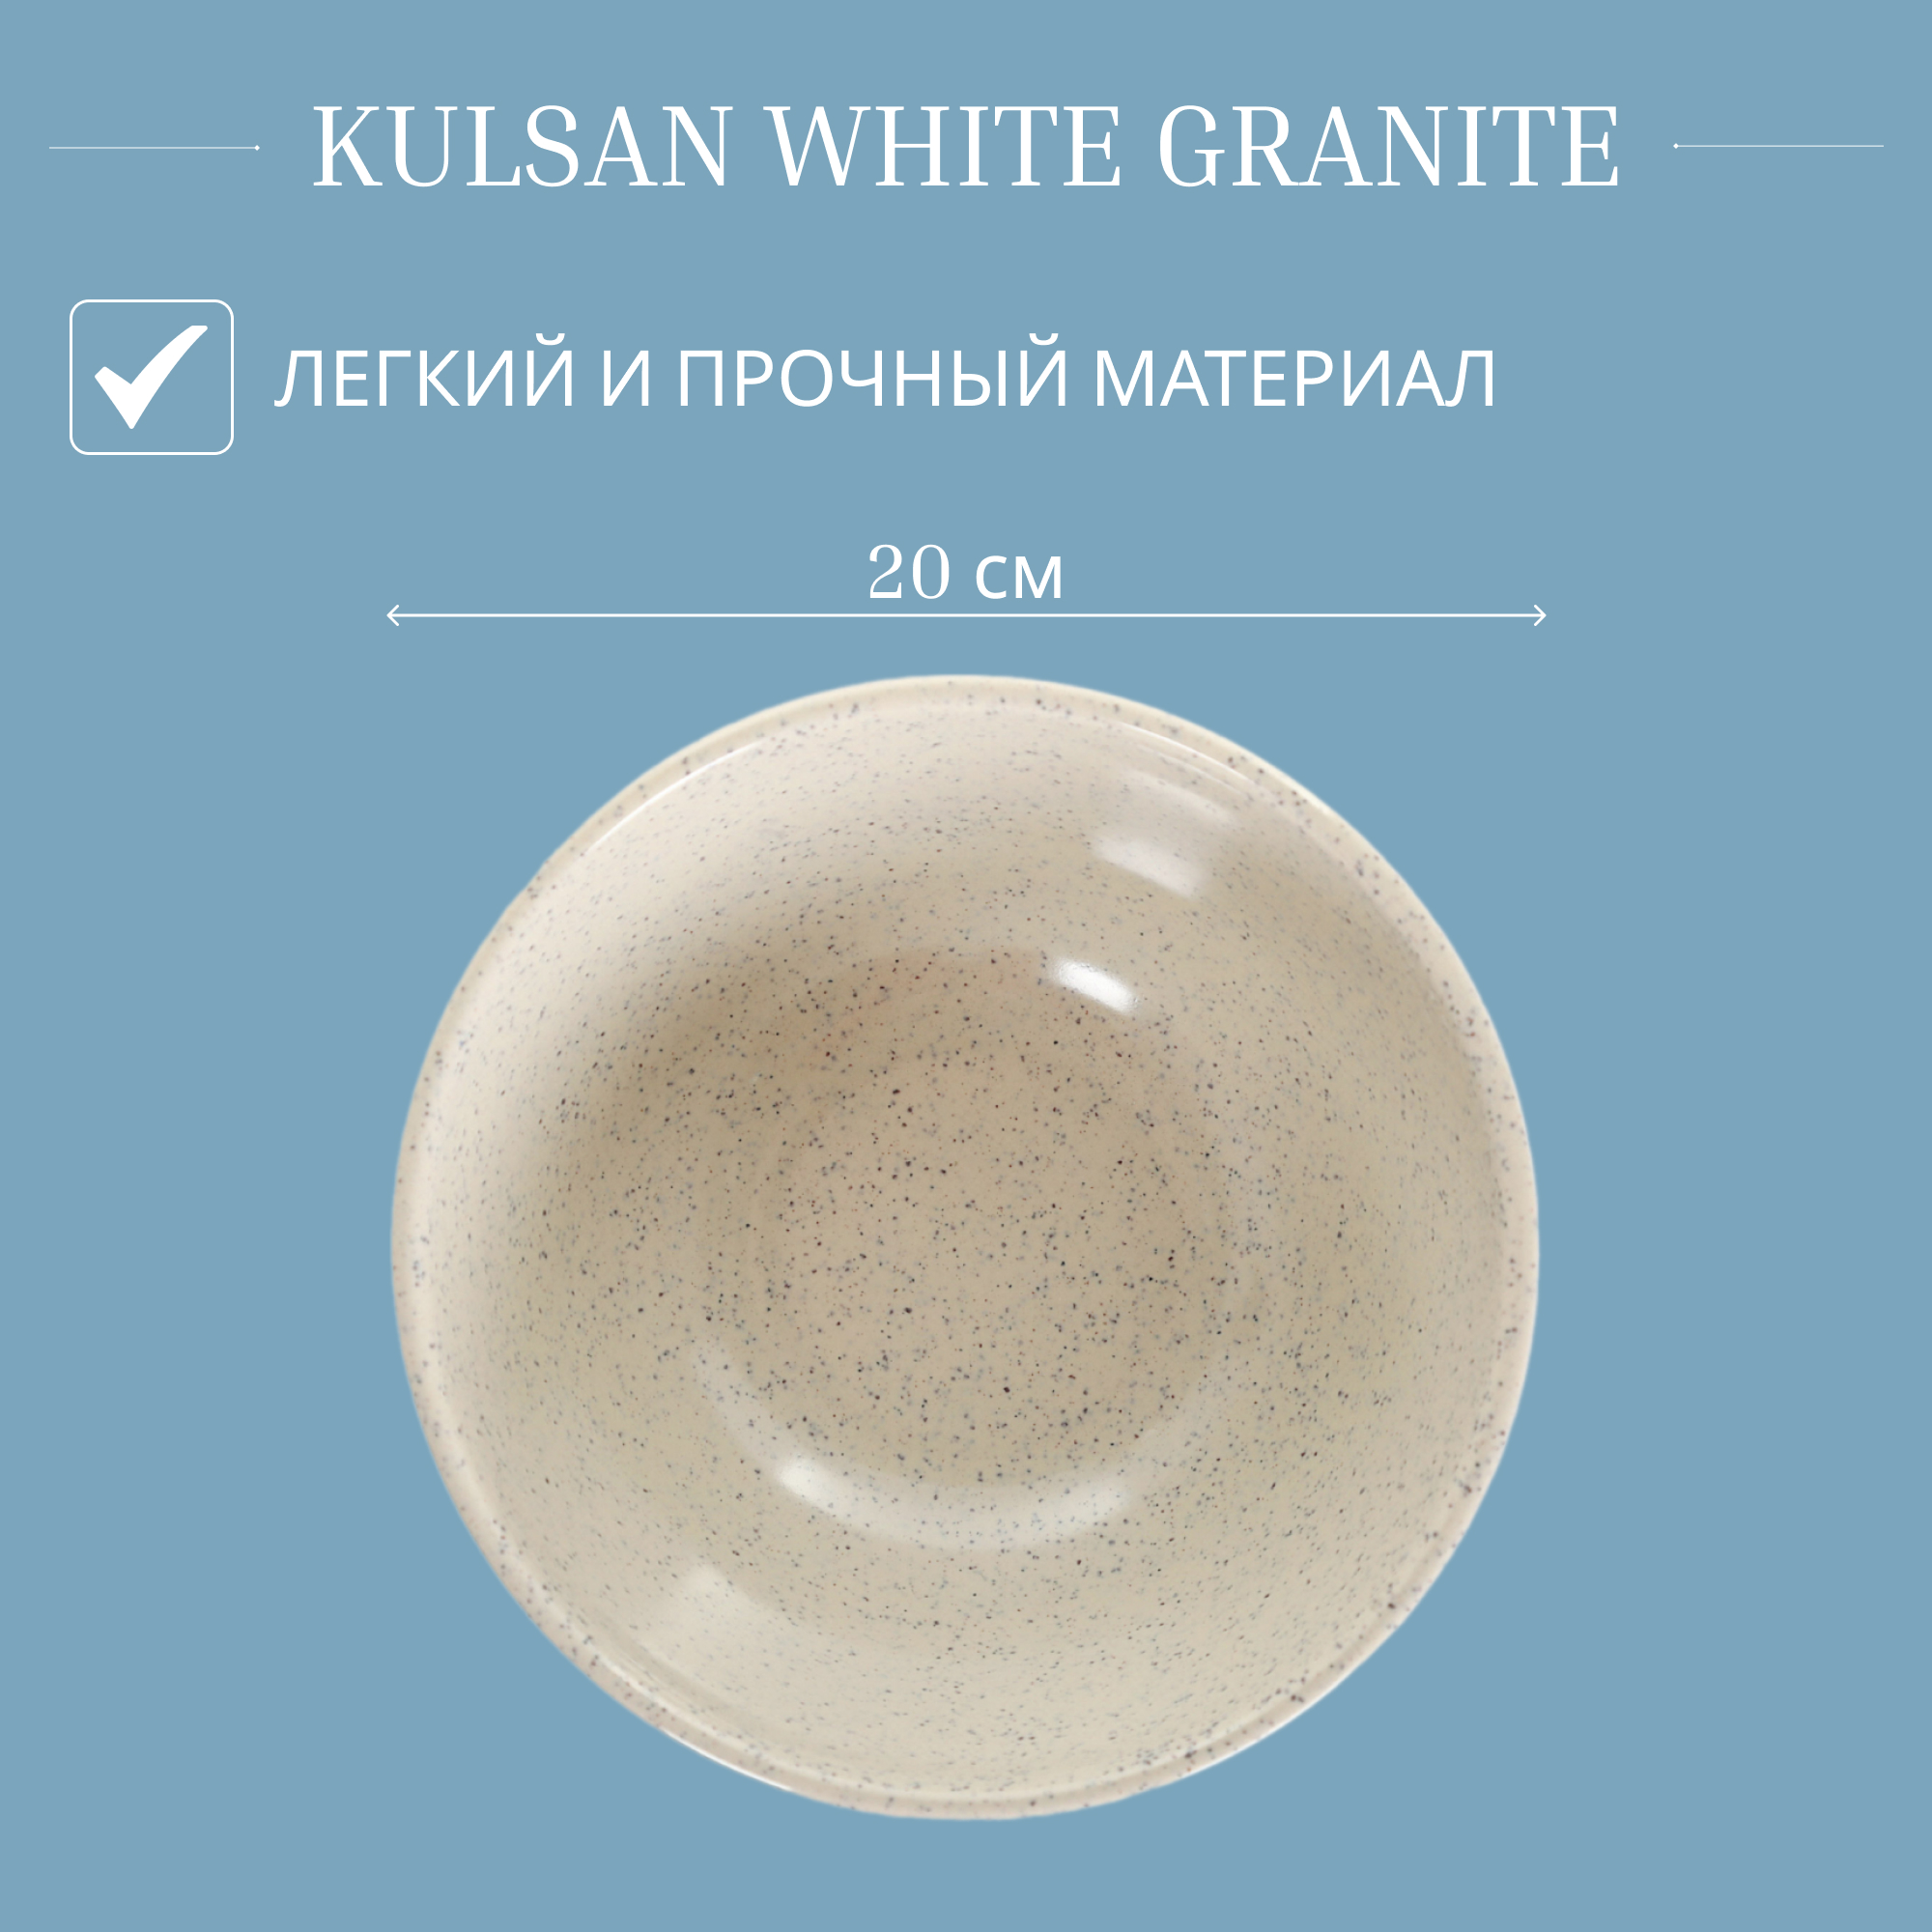 Салатница Kulsan White granite 20 см, цвет слоновая кость - фото 4